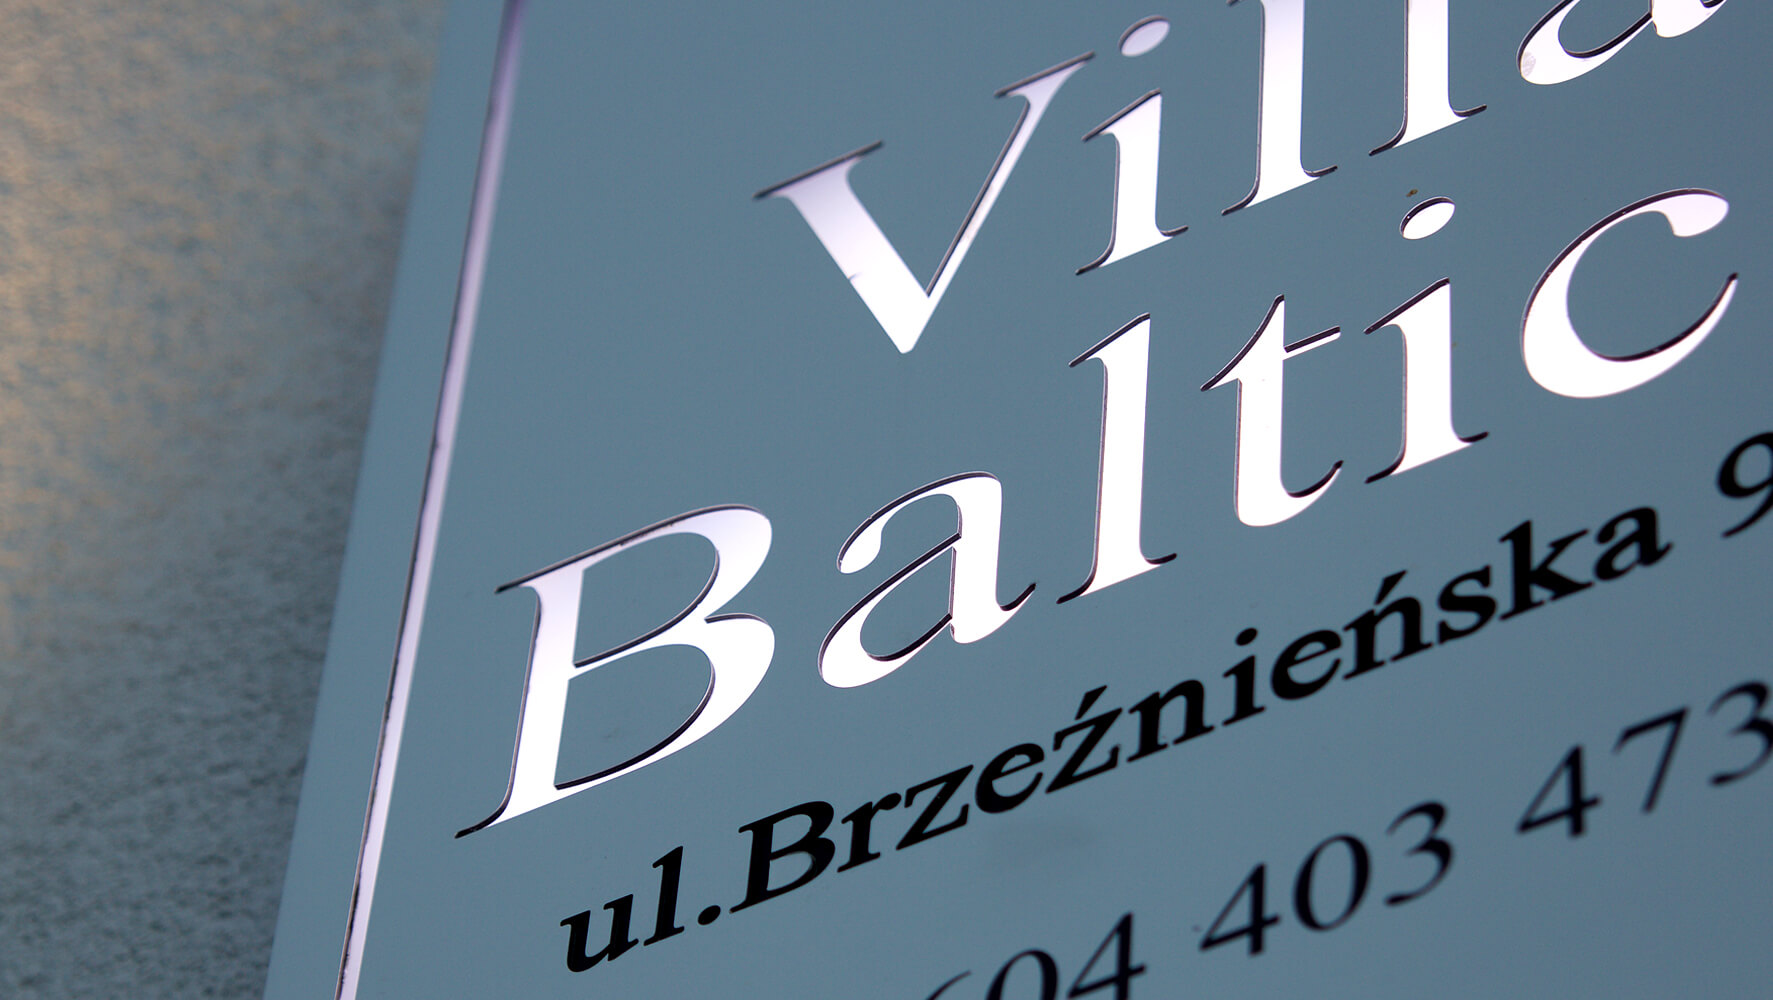 Villa Baltica - Villa Baltica - szyld firmy na kasetonie dibond